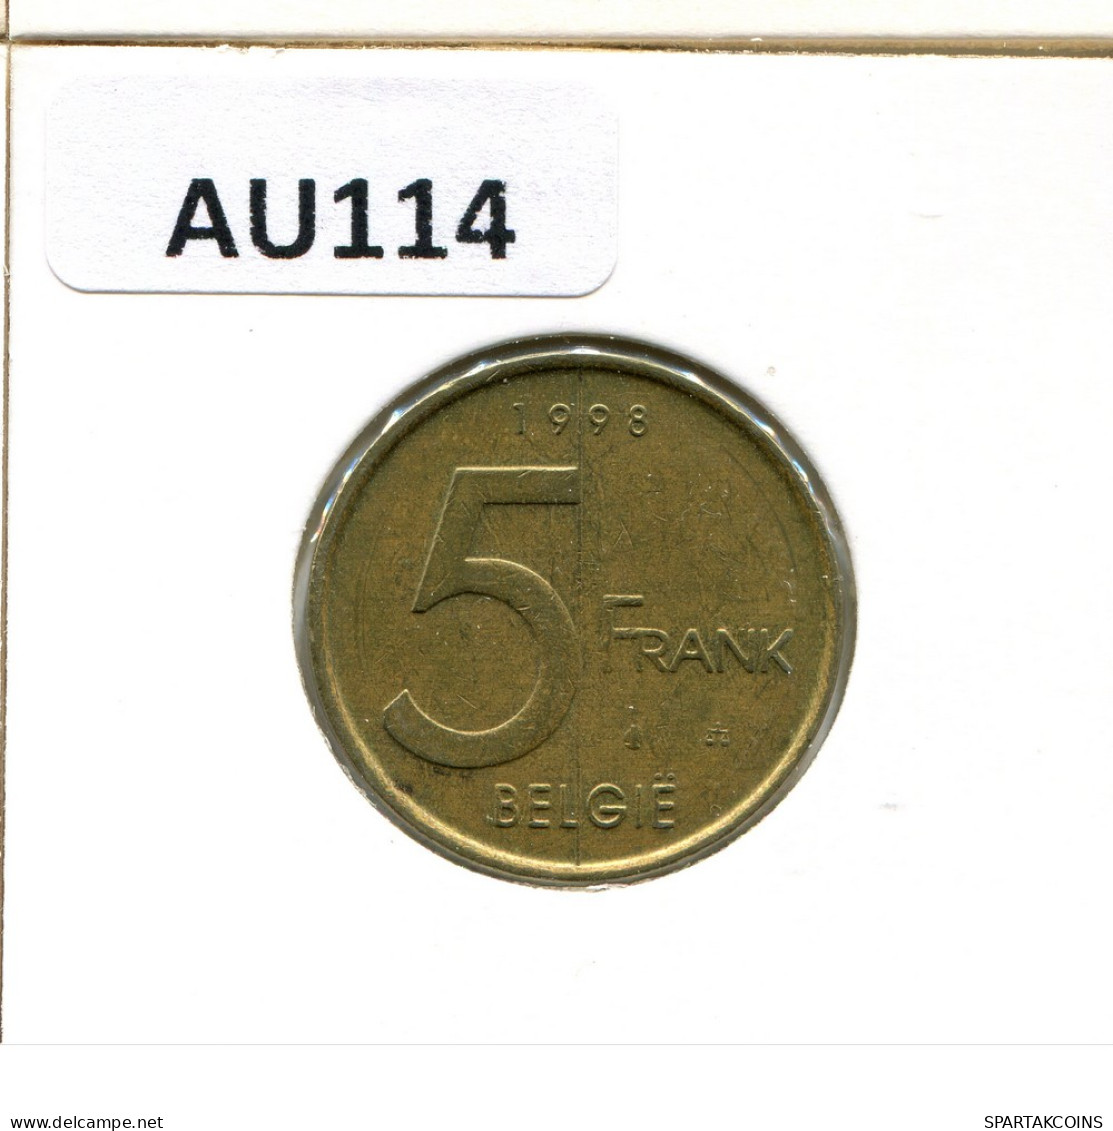 5 FRANCS 1998 DUTCH Text BELGIUM Coin #AU114.U - 5 Frank